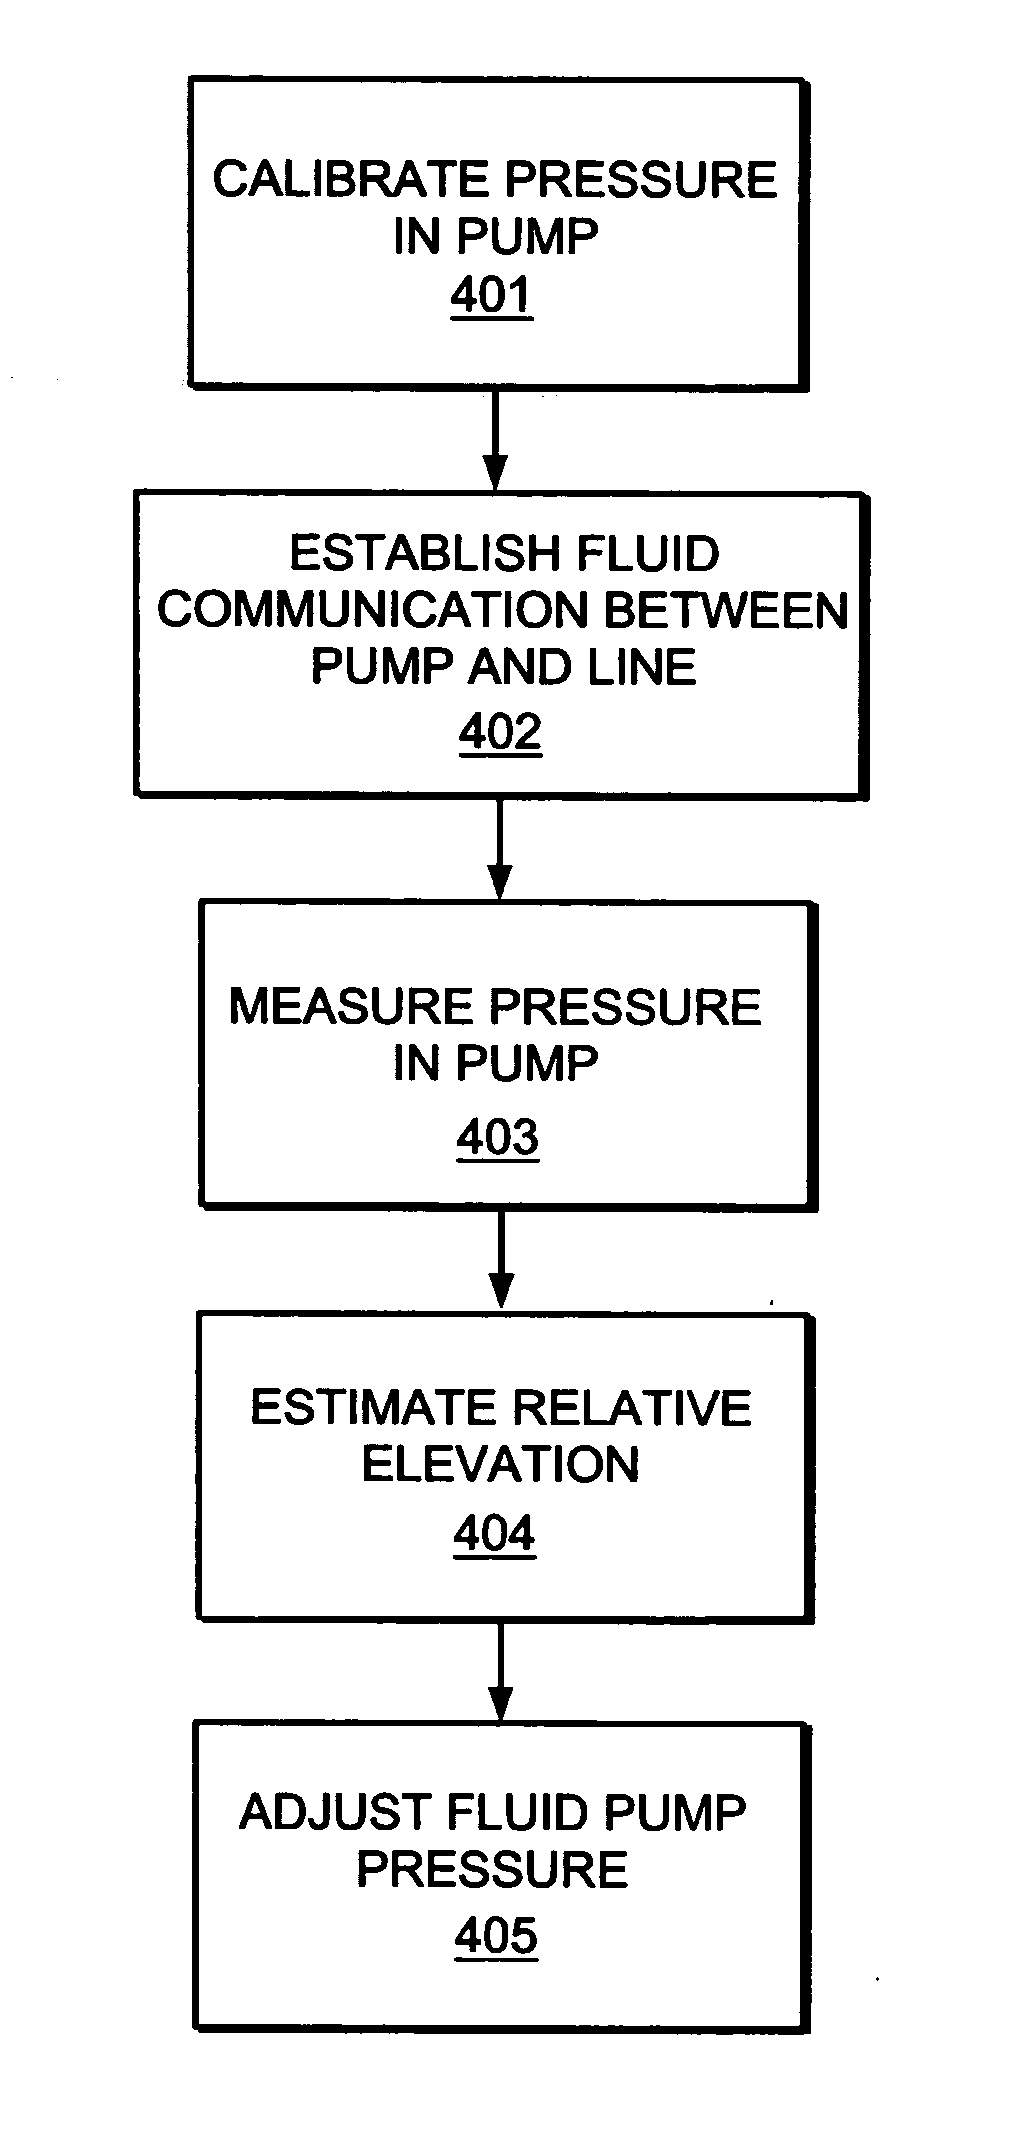 Method and device for regulating fluid pump pressures